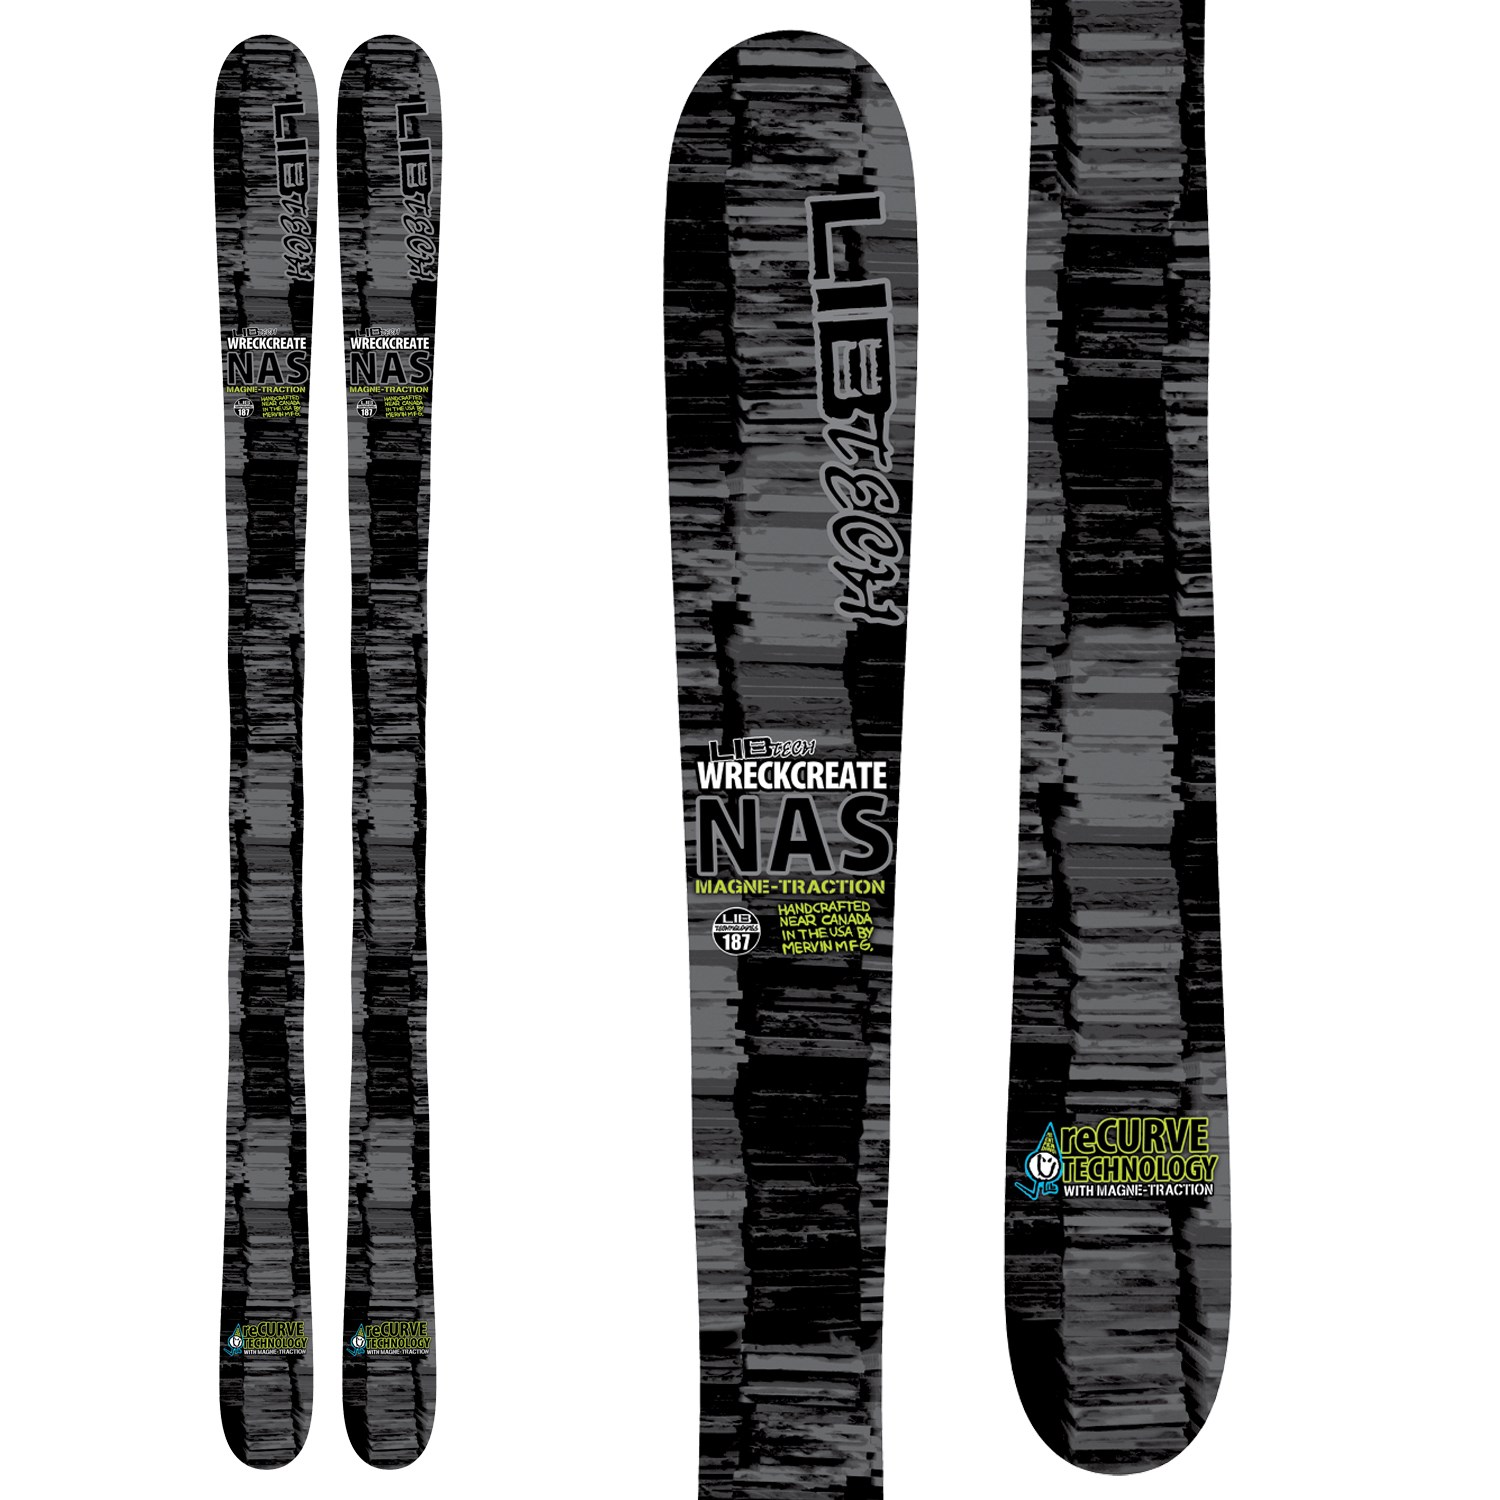 LIB TECH snowboard skateboard surf ski 2014 5 Pack Logo Stickers New Old Stock 